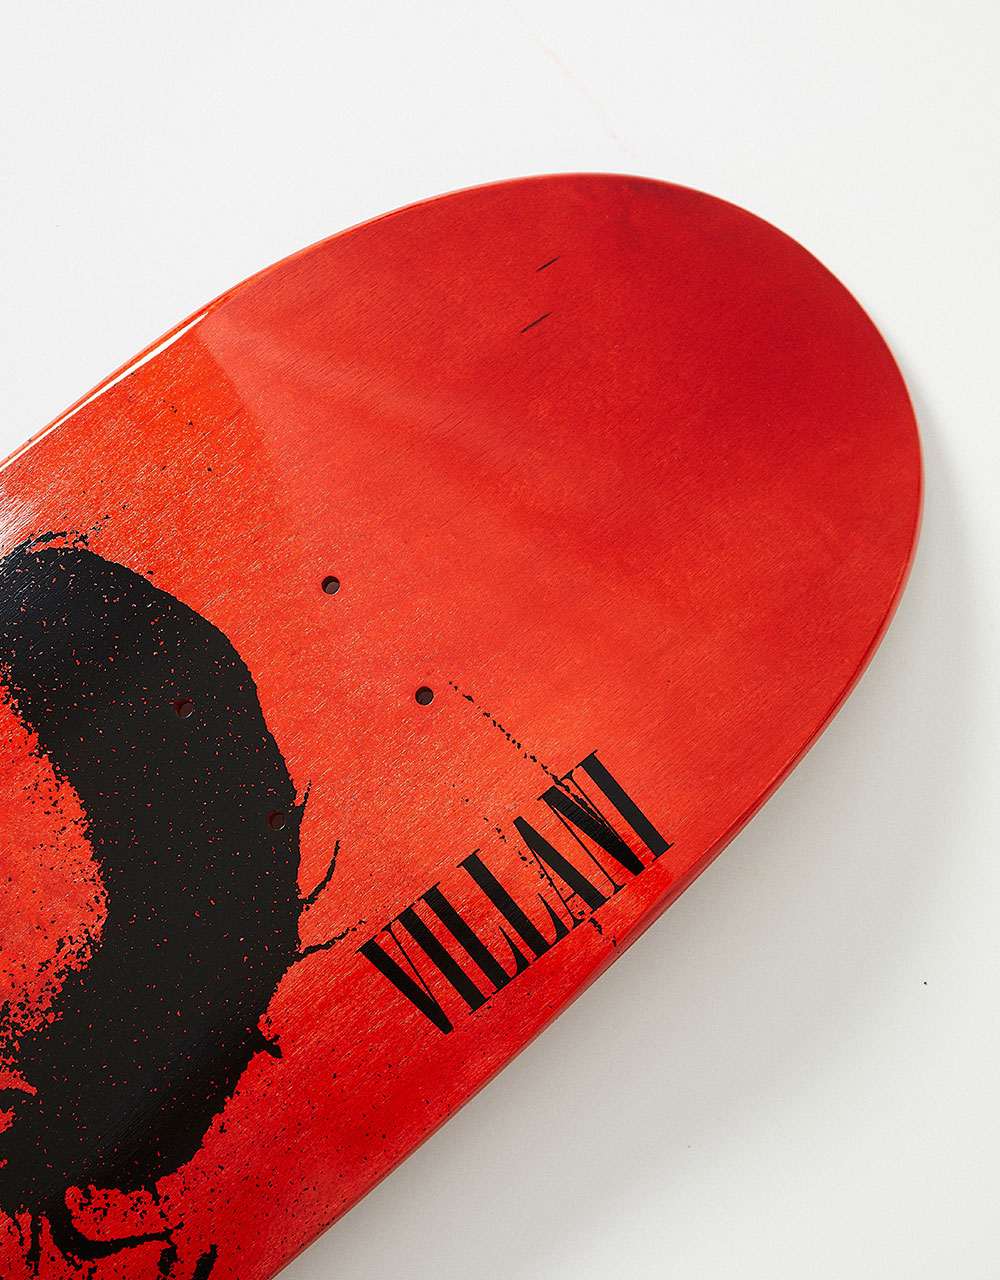 Primitive x Halloween Villani 'Egg' Skateboard Deck - 9.125"